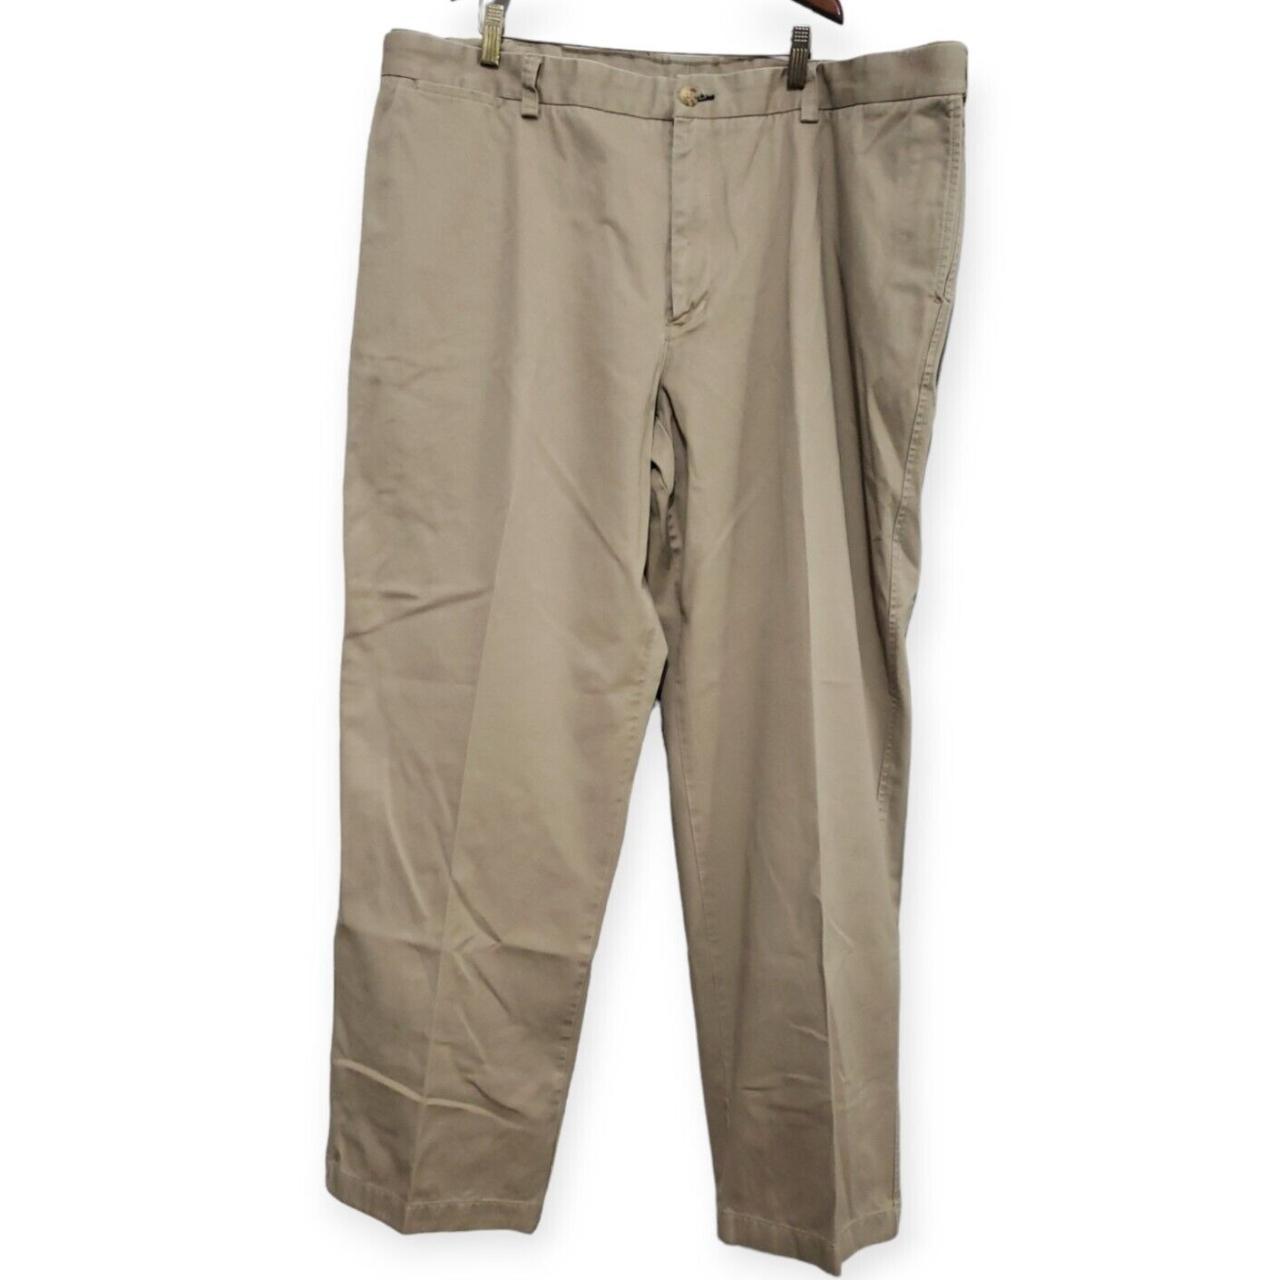 Duluth Trading Co Mens 44x34 Tan Khaki Pants Stretch... - Depop